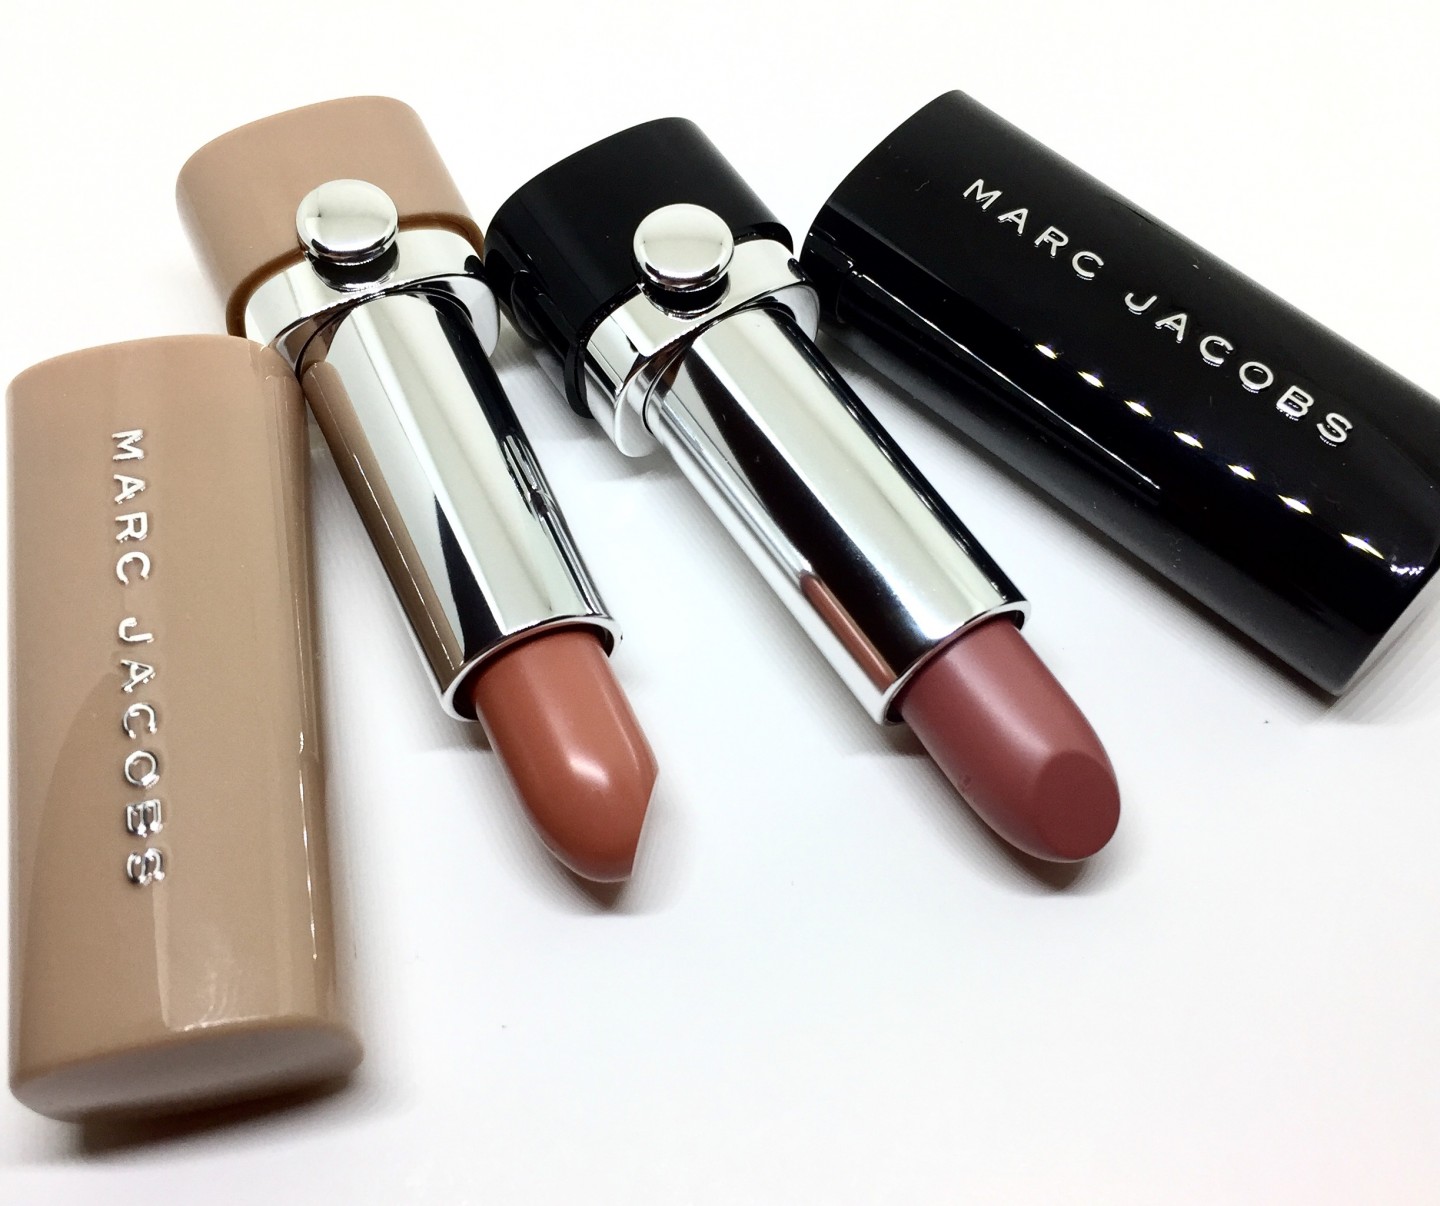 Marc Jacobs Le Marc Lip Creme & New Nudes Sheer Gel Lipstick